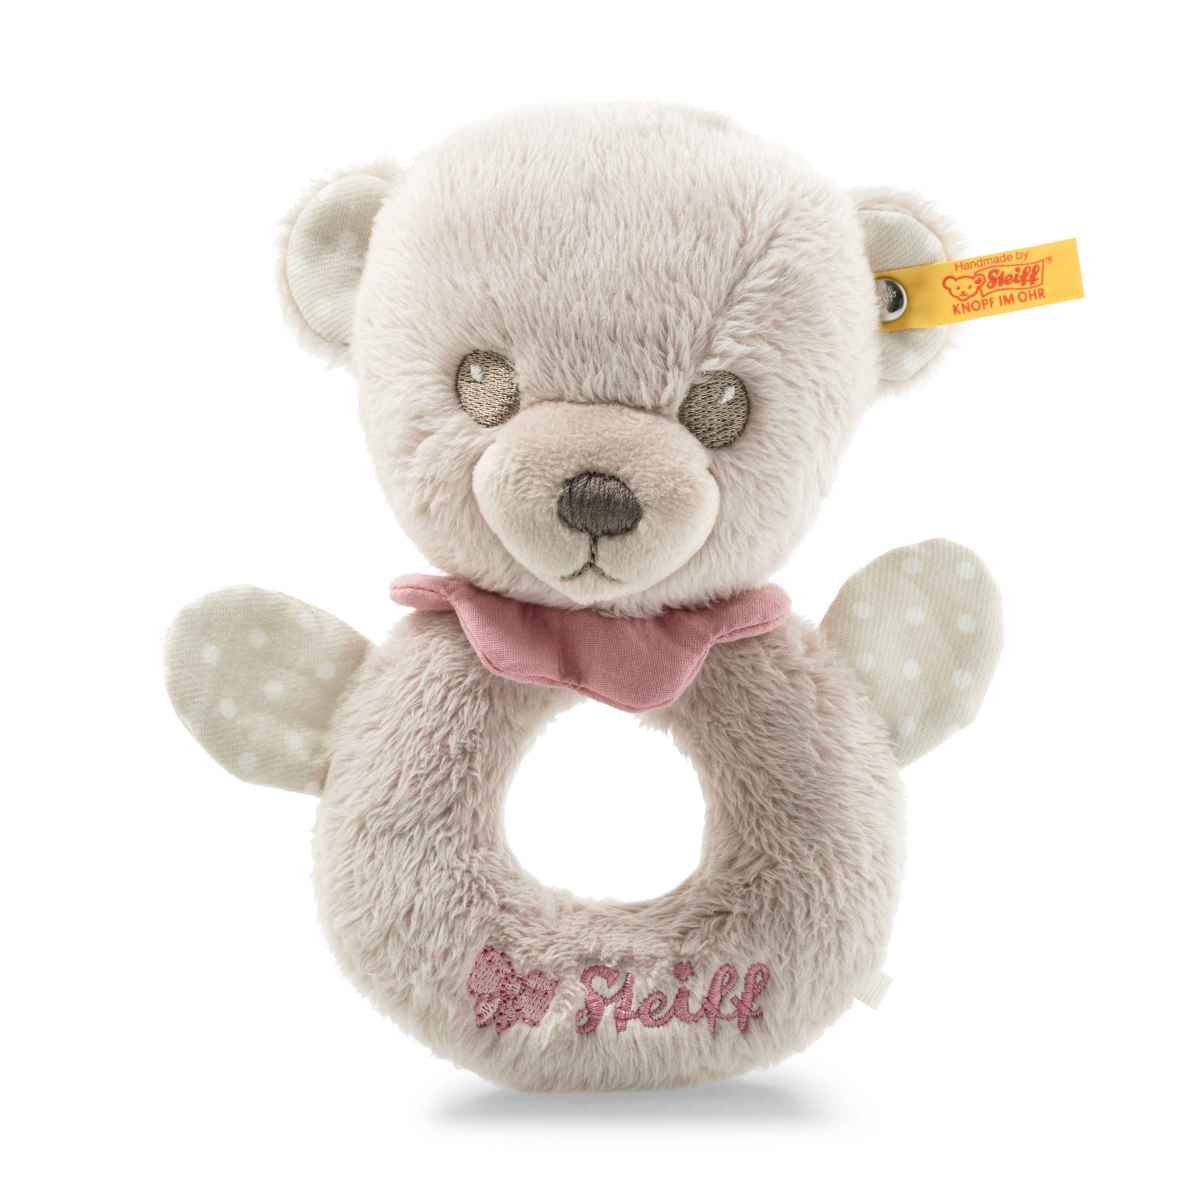 Погремушка Steiff Hello Baby Lea Teddy bear grip toy with rattle in gift box Штайф Мишка погремушка мишка тедди коралловая 21